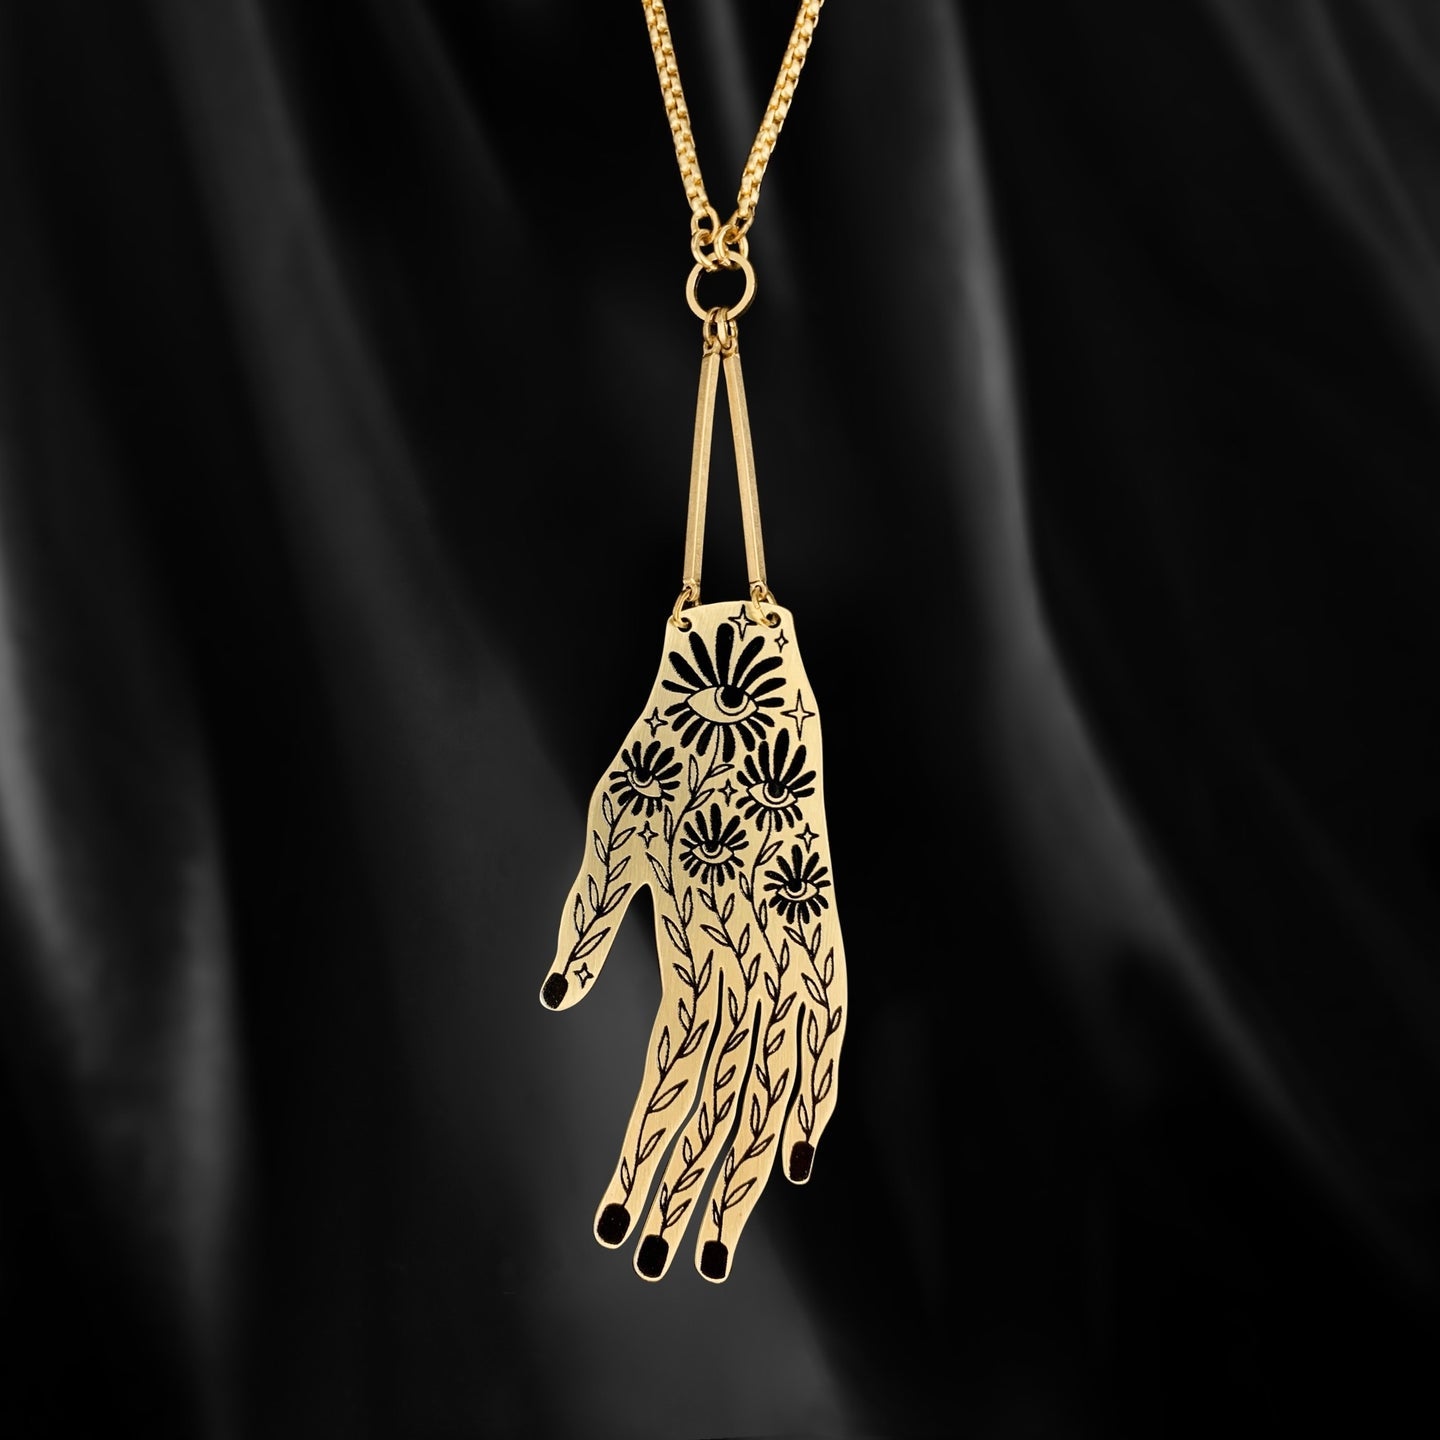 While Odin Sleeps “Natura” Necklace